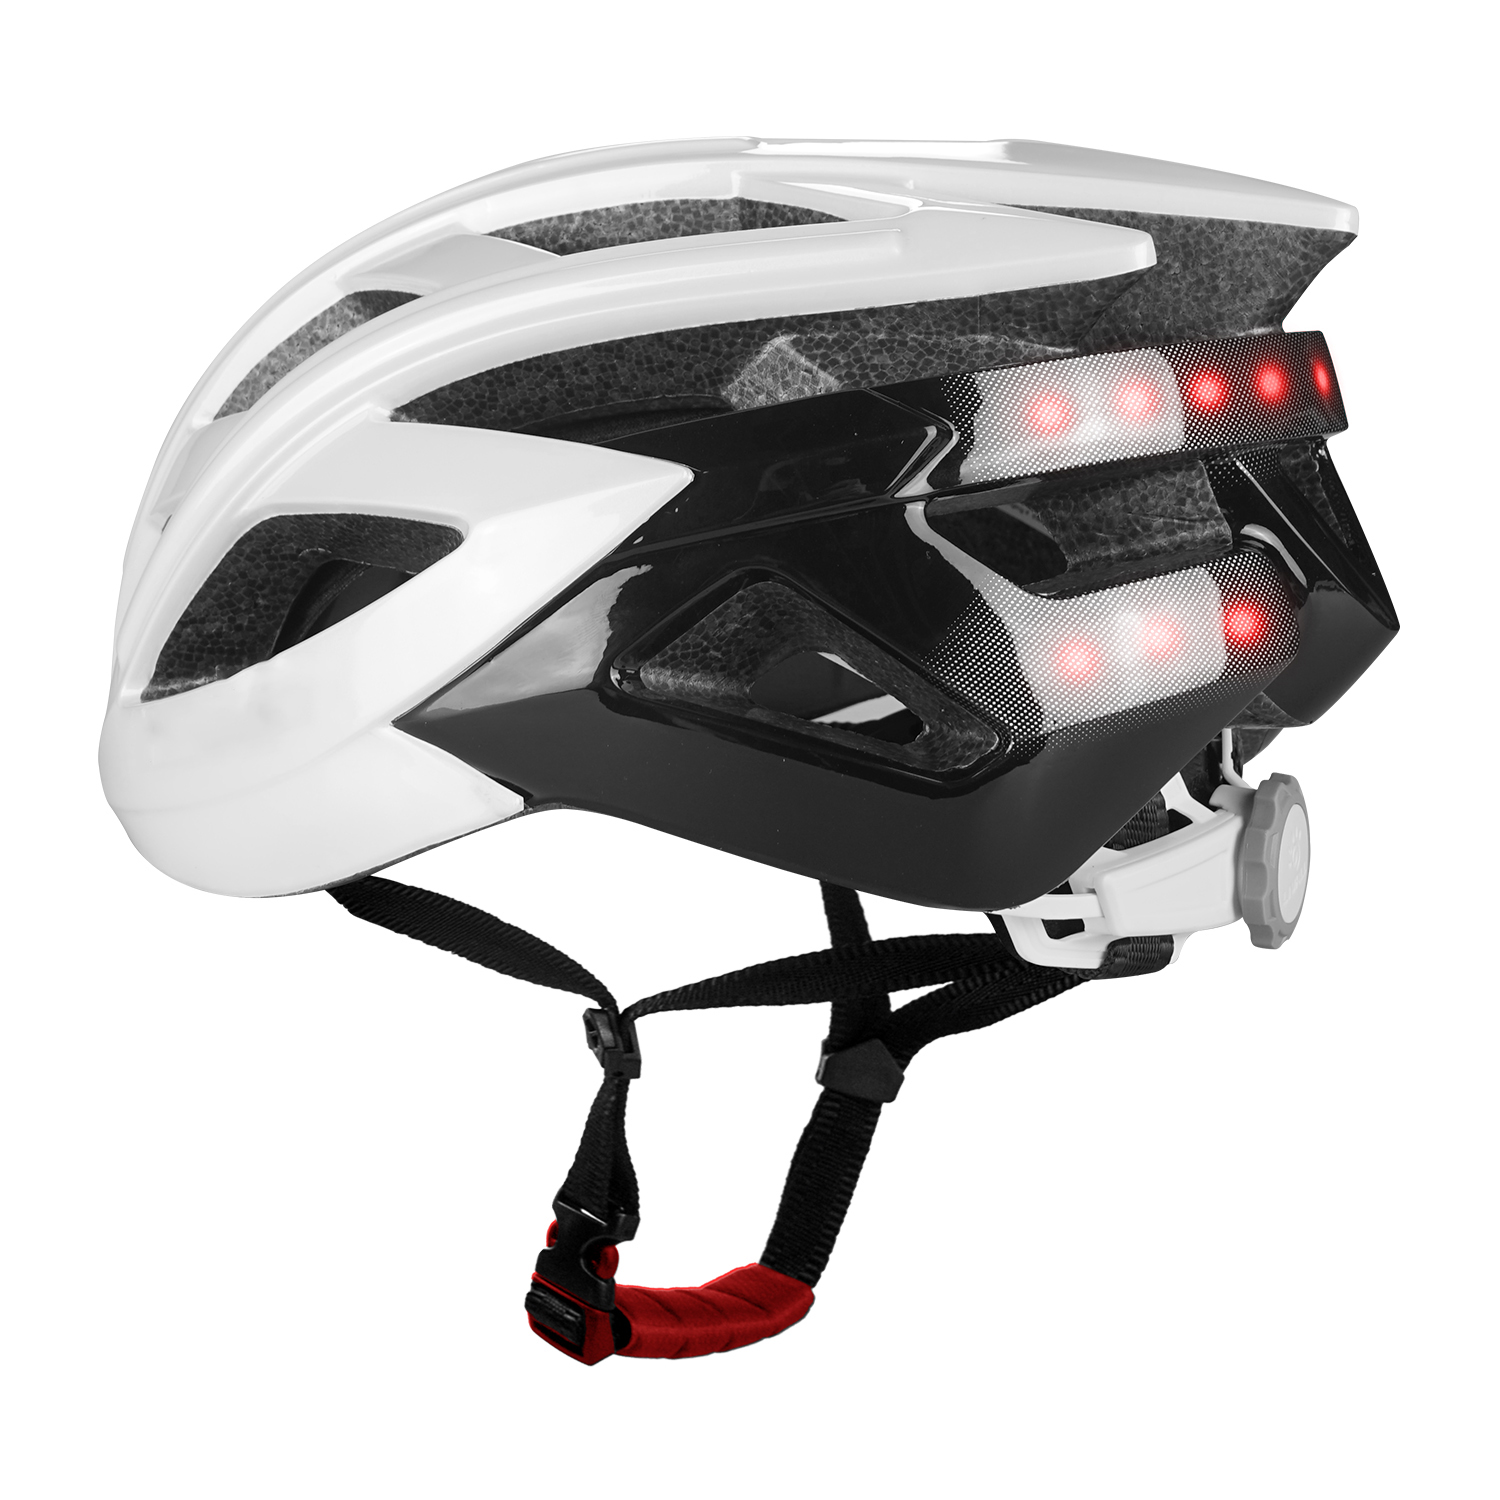 PSBH-60 S Eneo. Smart Bluetooth Bike sports helmet.